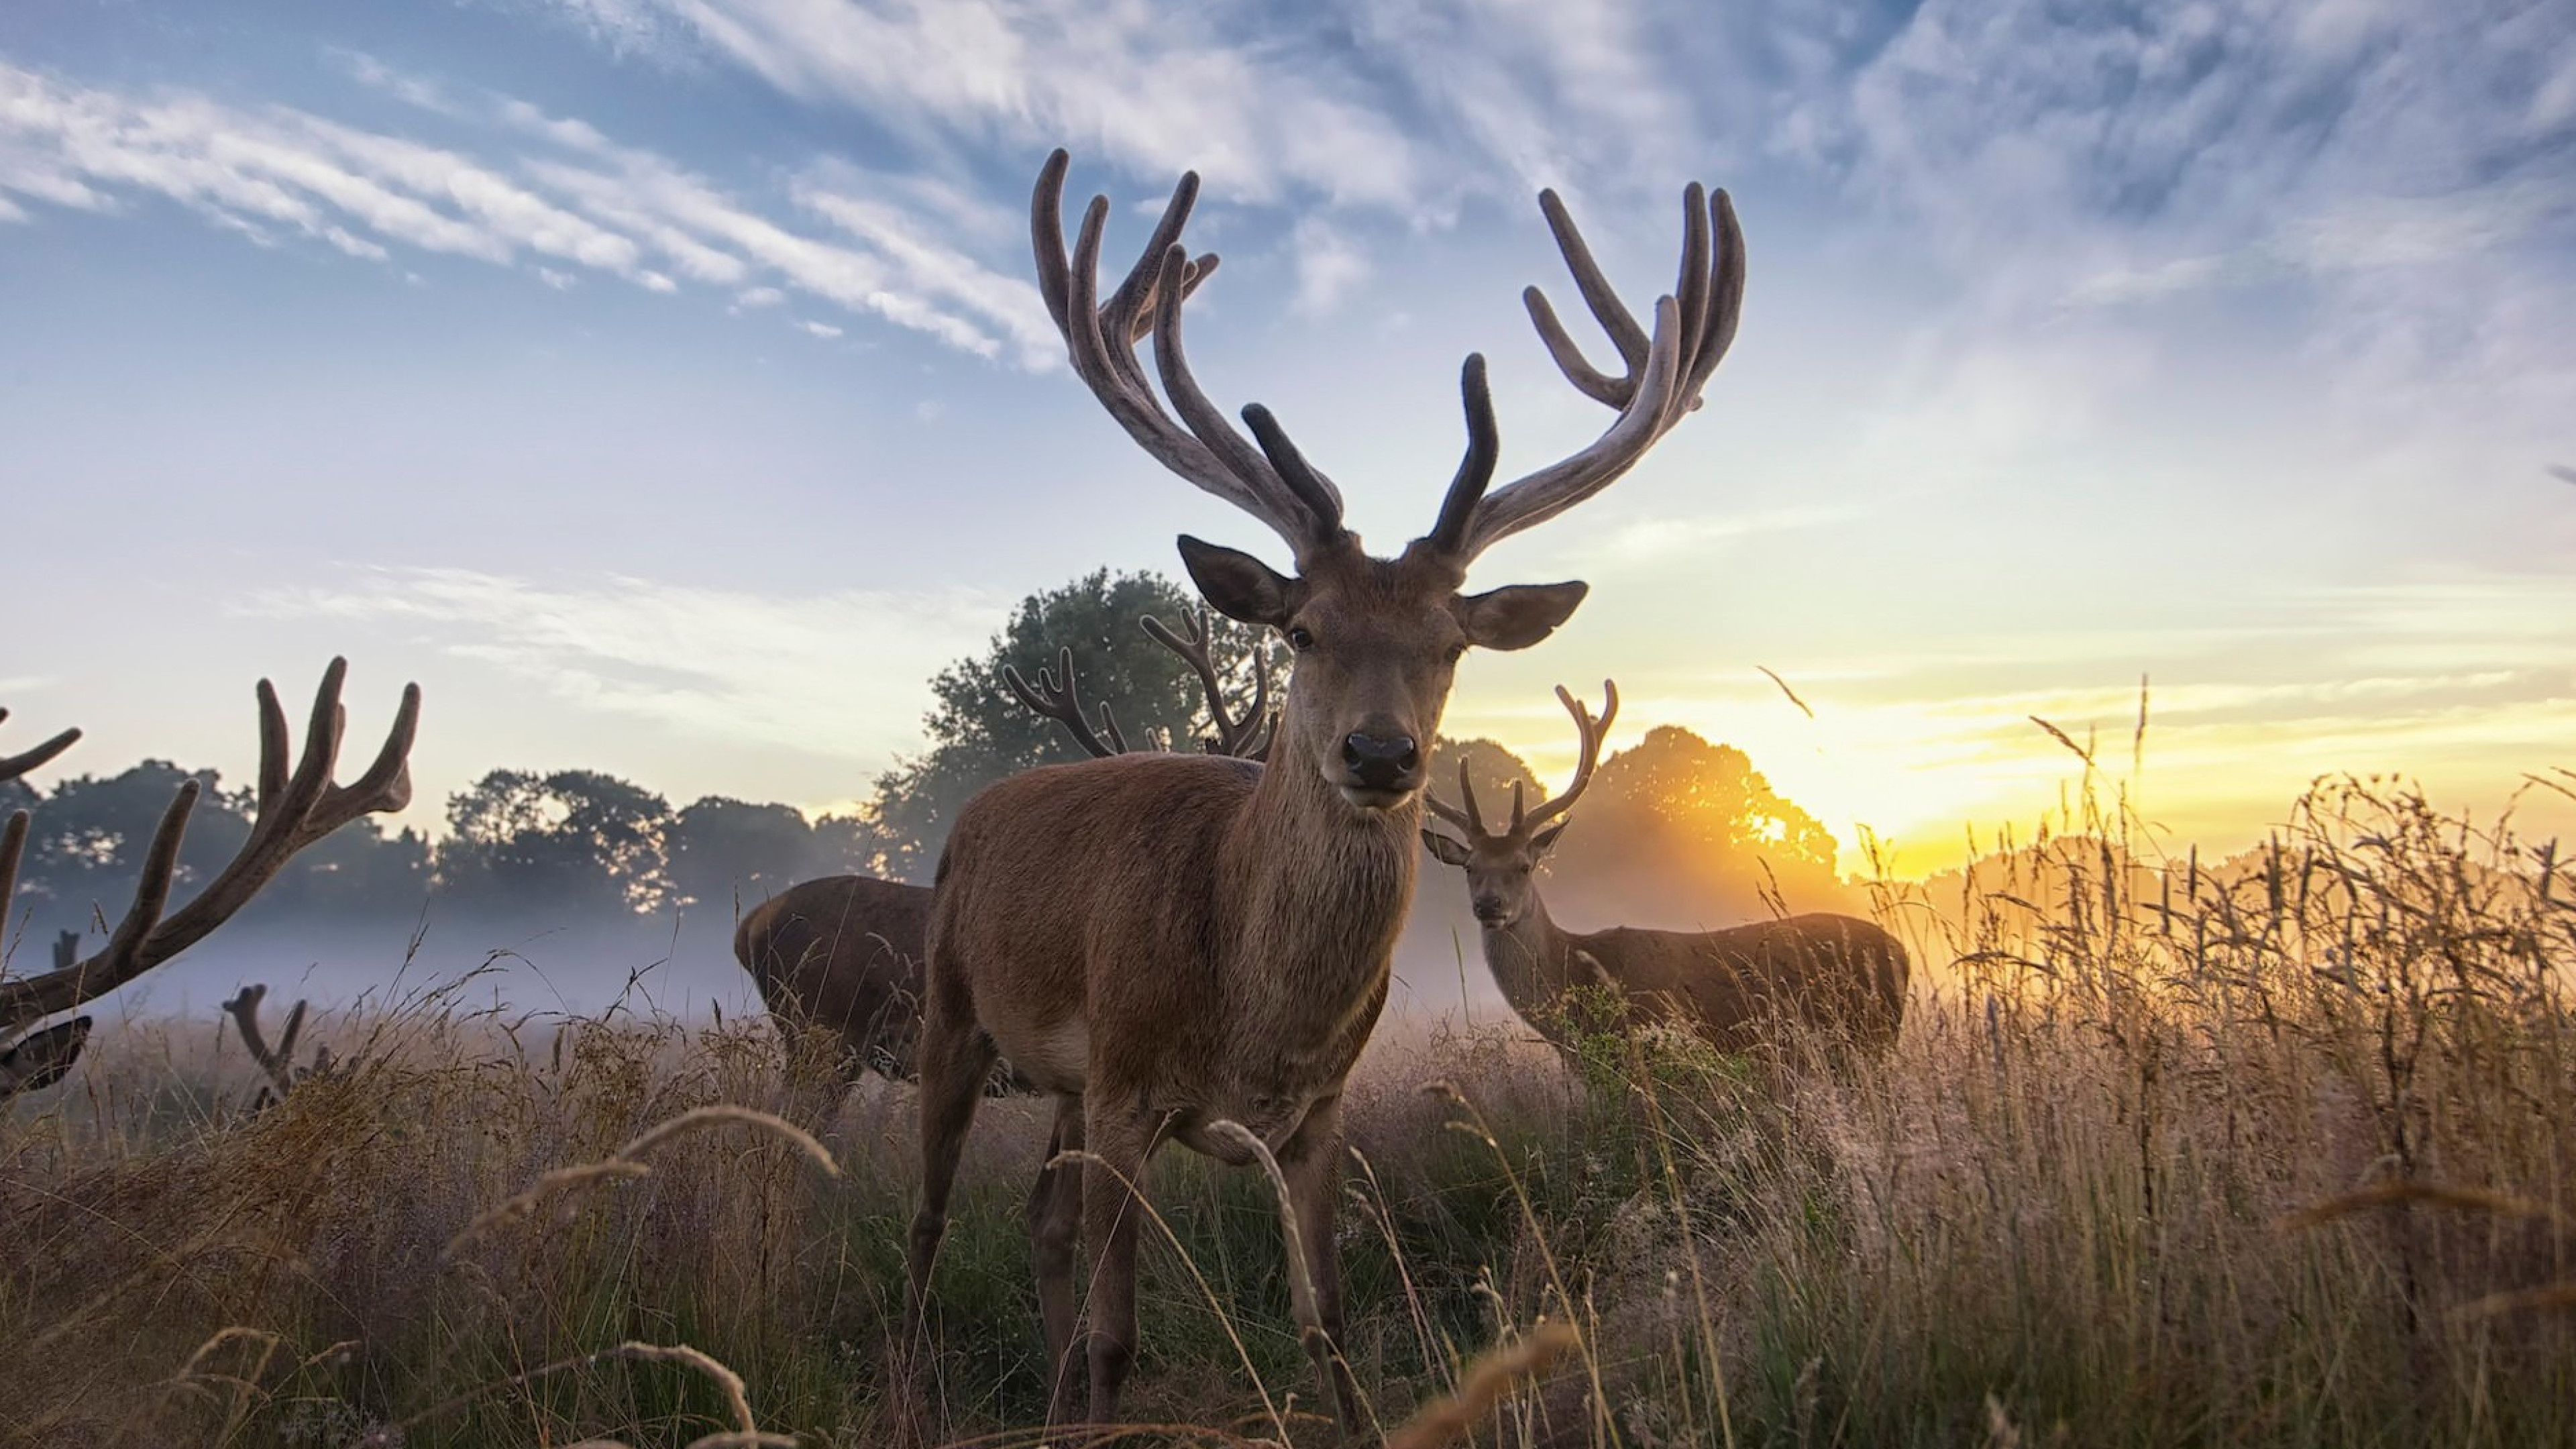 Brown Deer on Green Grass During Sunset. Wallpaper in 3840x2160 Resolution